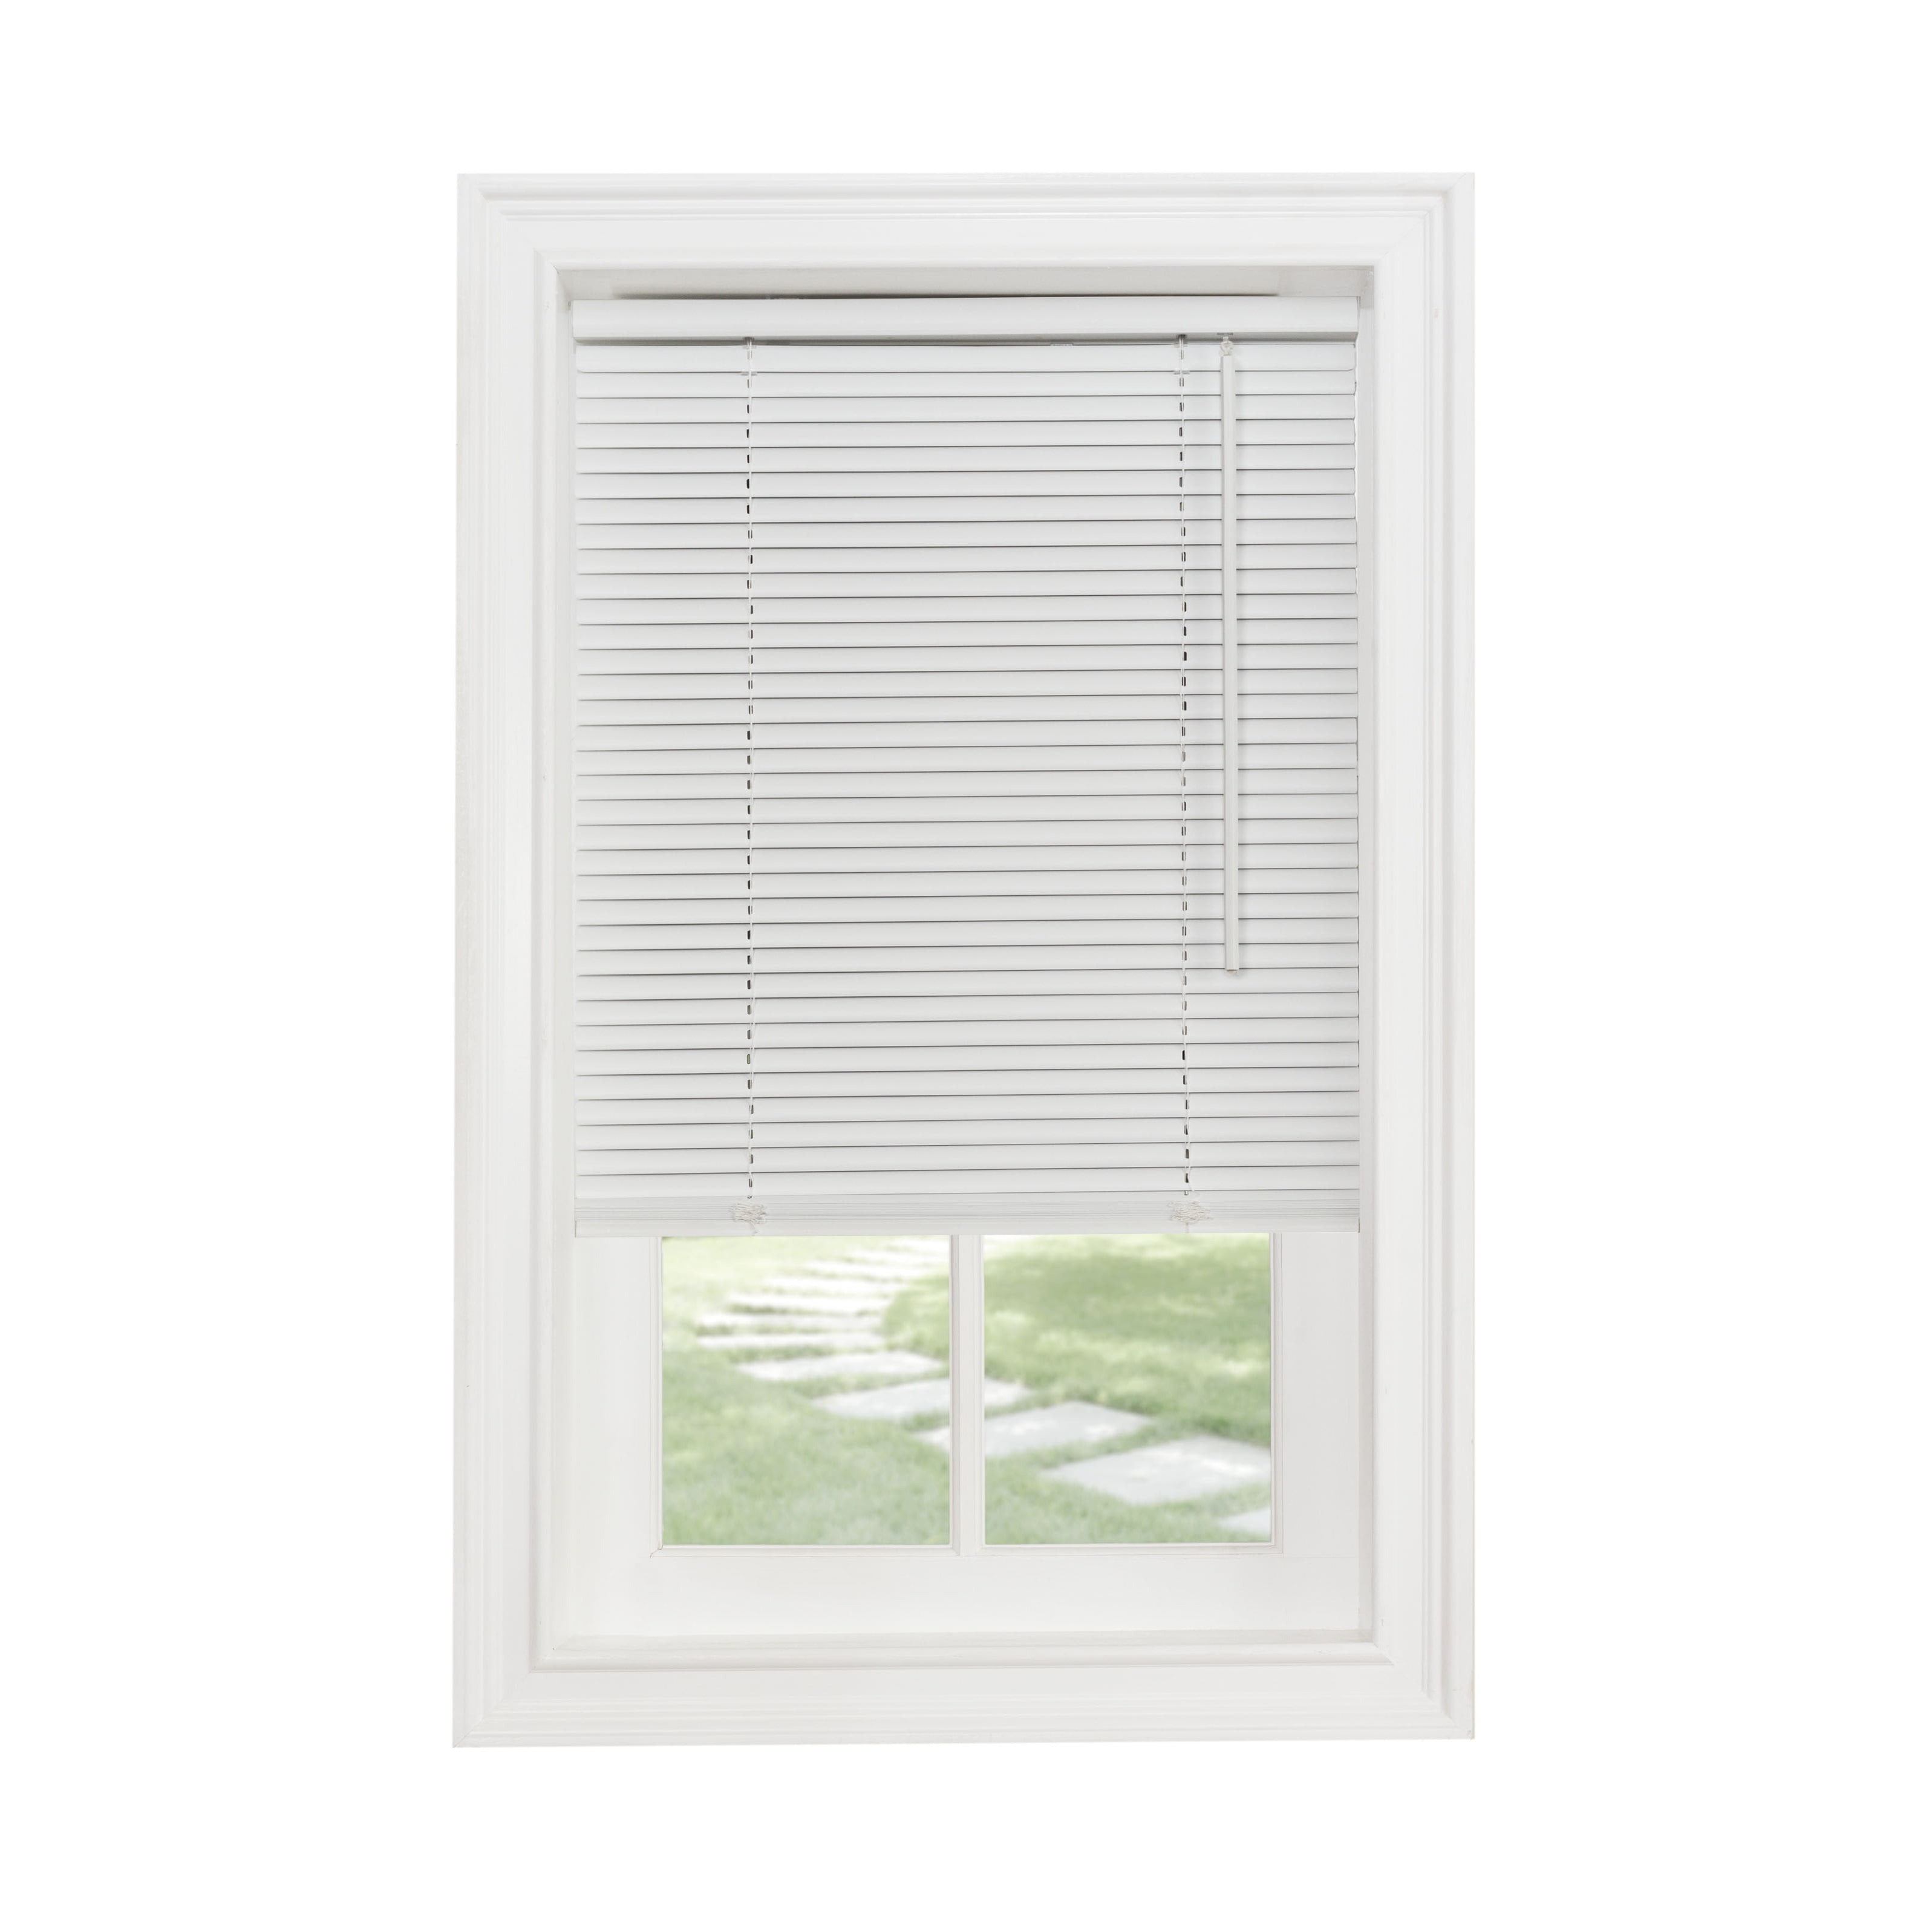 28x48 in White Aluminum Mini Blind Cordless Room Darkening Privacy Window Shade 